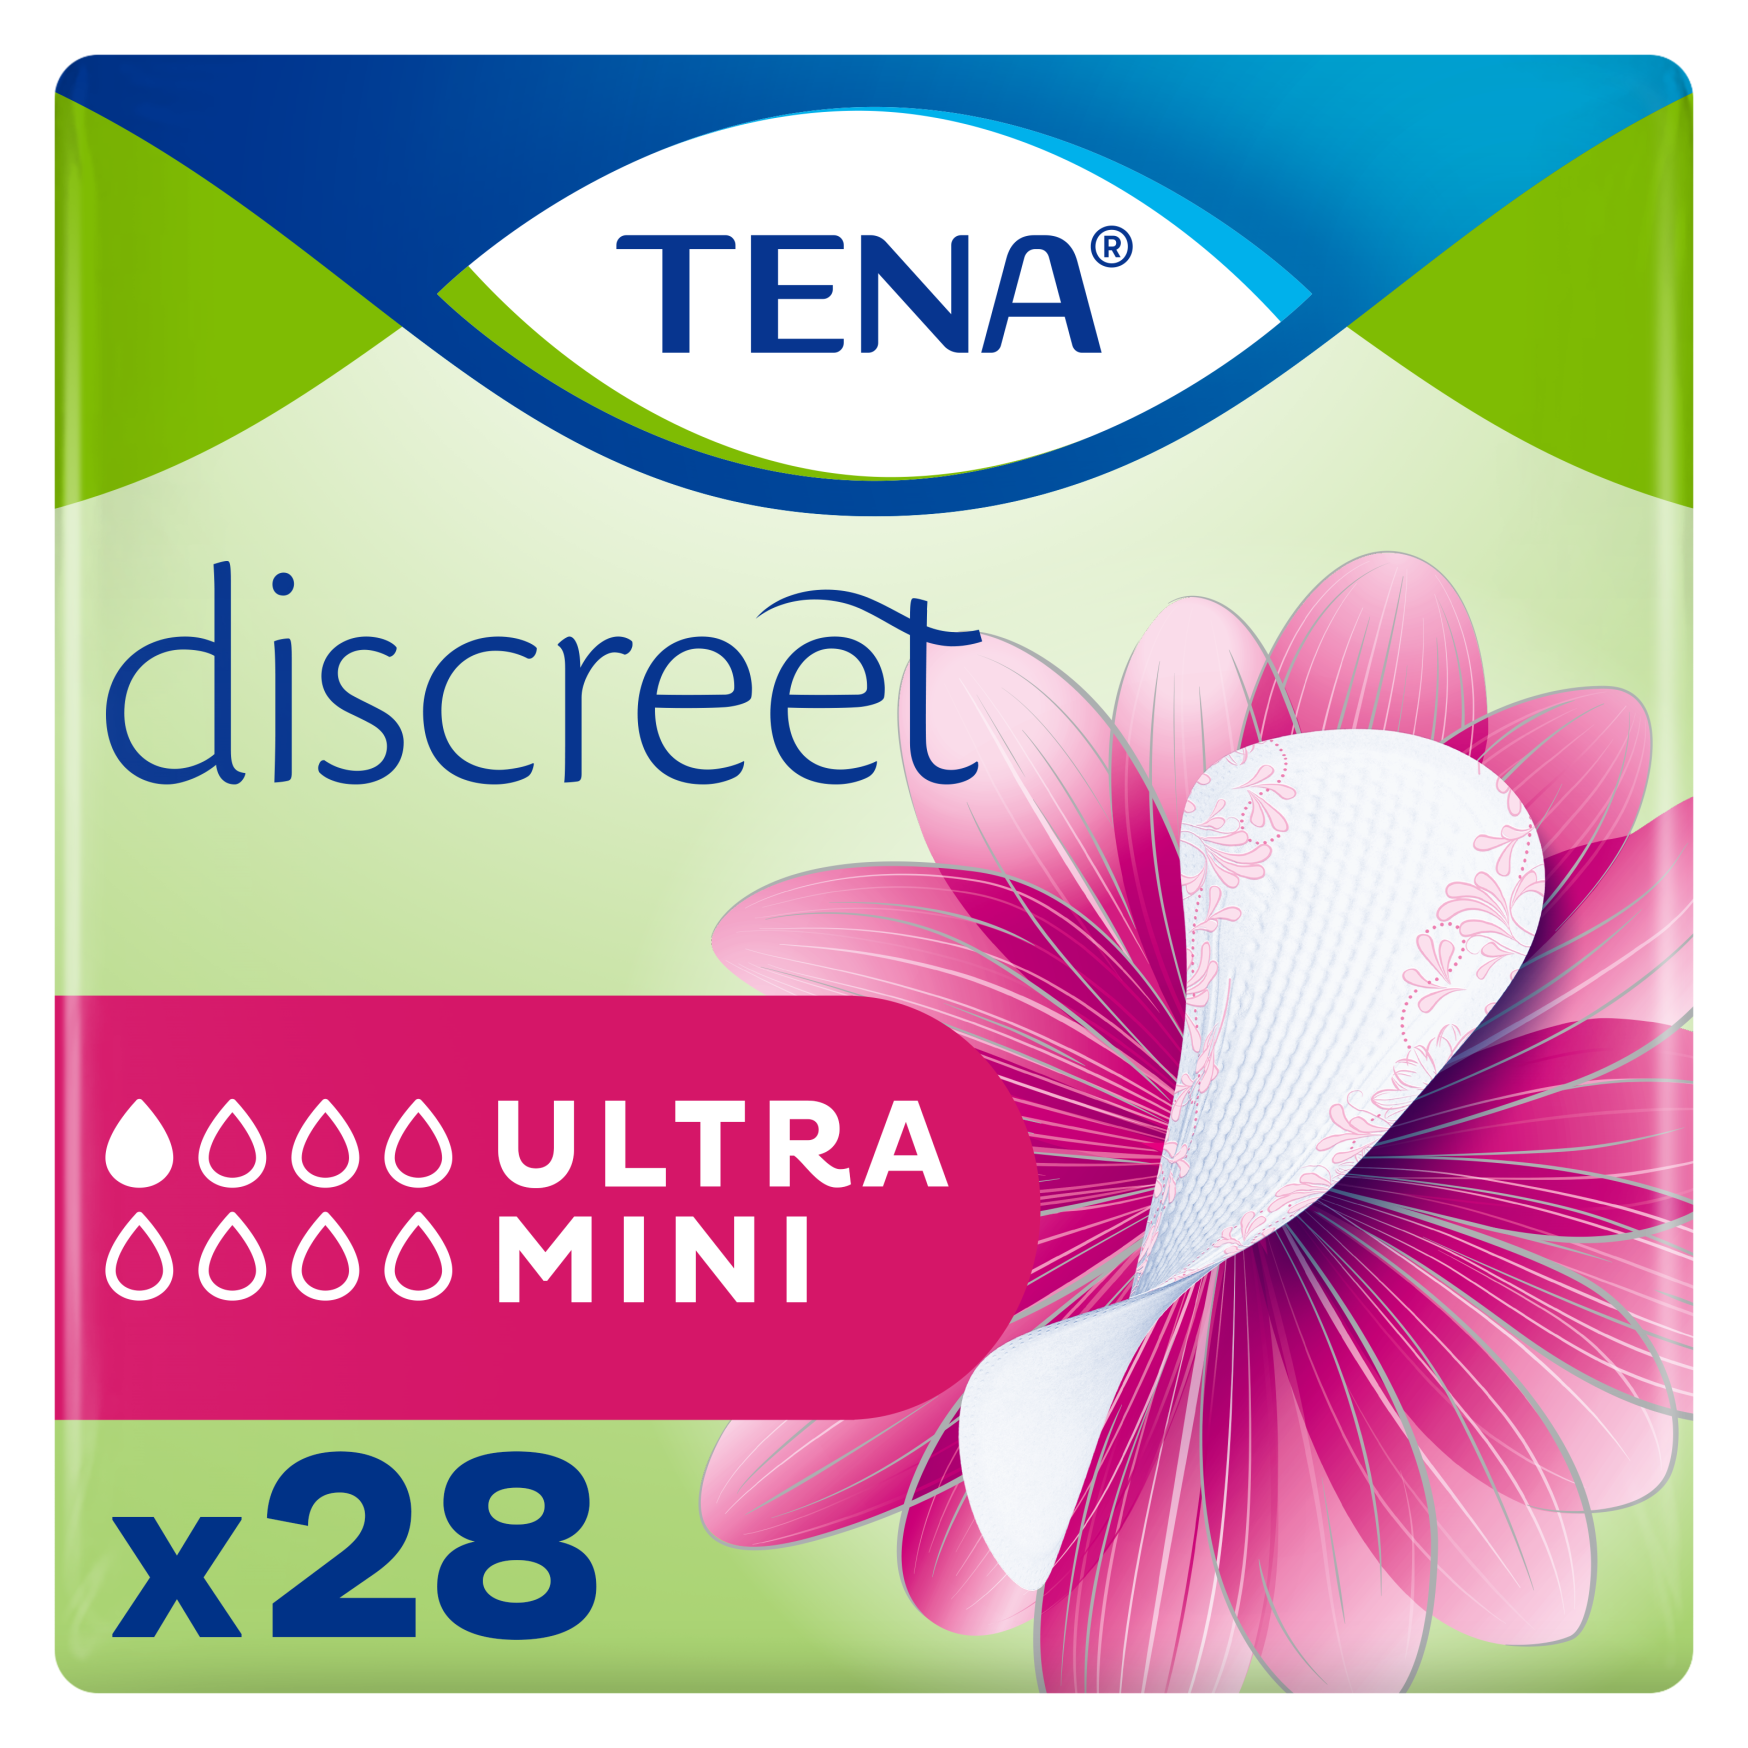 uitslag Niet essentieel voorwoord TENA Discreet Ultra Mini inlegkruisje. | Hulpmiddelonline.be